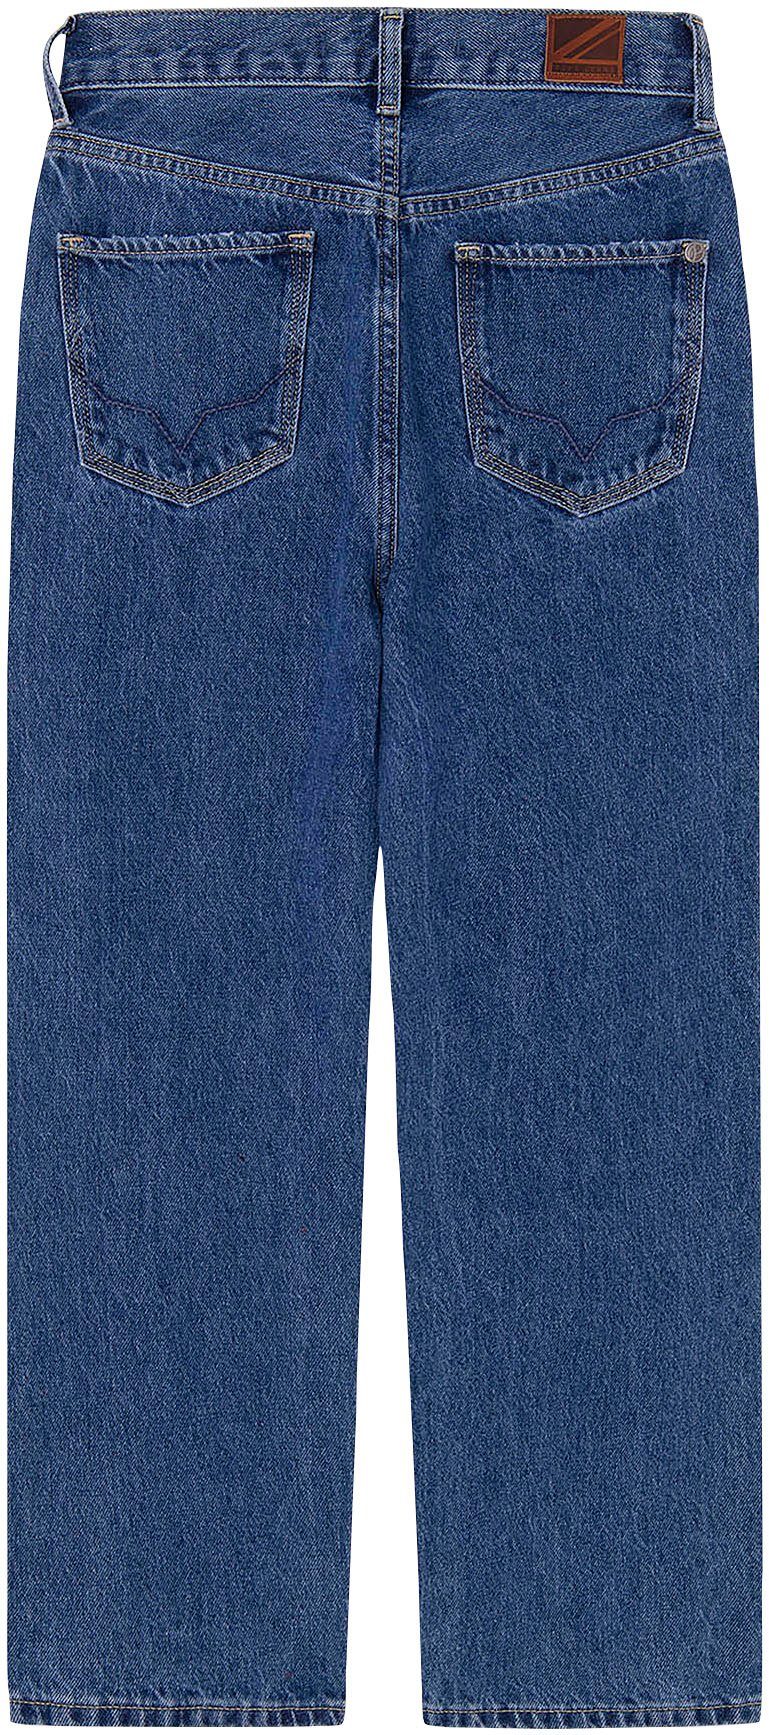 Pepe Jeans 5-pocket jeans LOOSE REPAIR